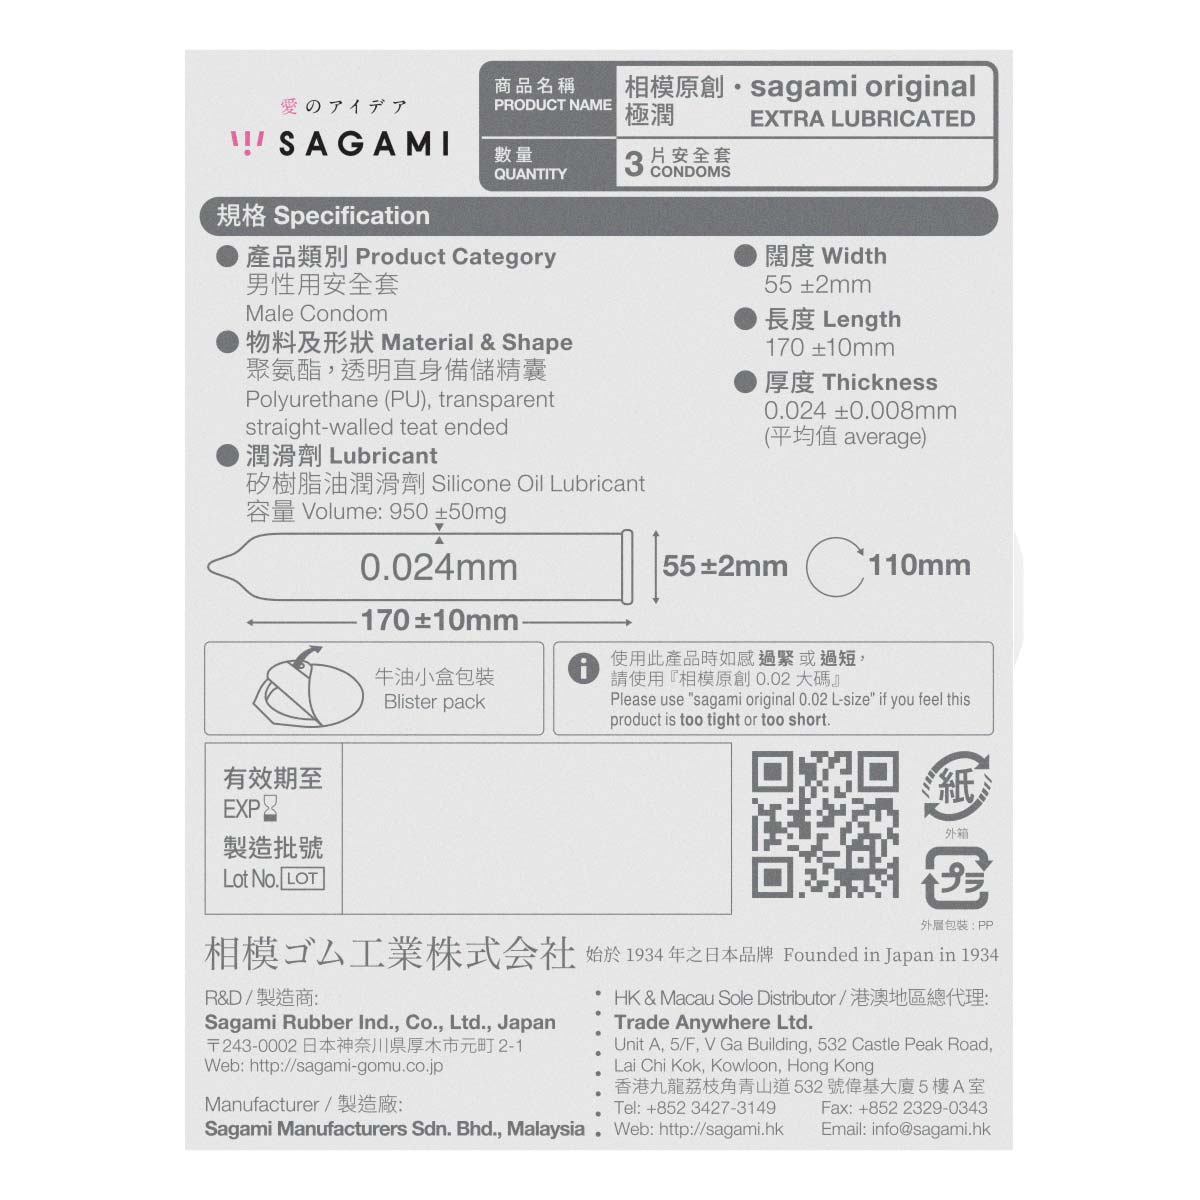 Sagami Original 0.02 Extra Lubricated (2nd generation) 3's Pack PU Condom-p_3